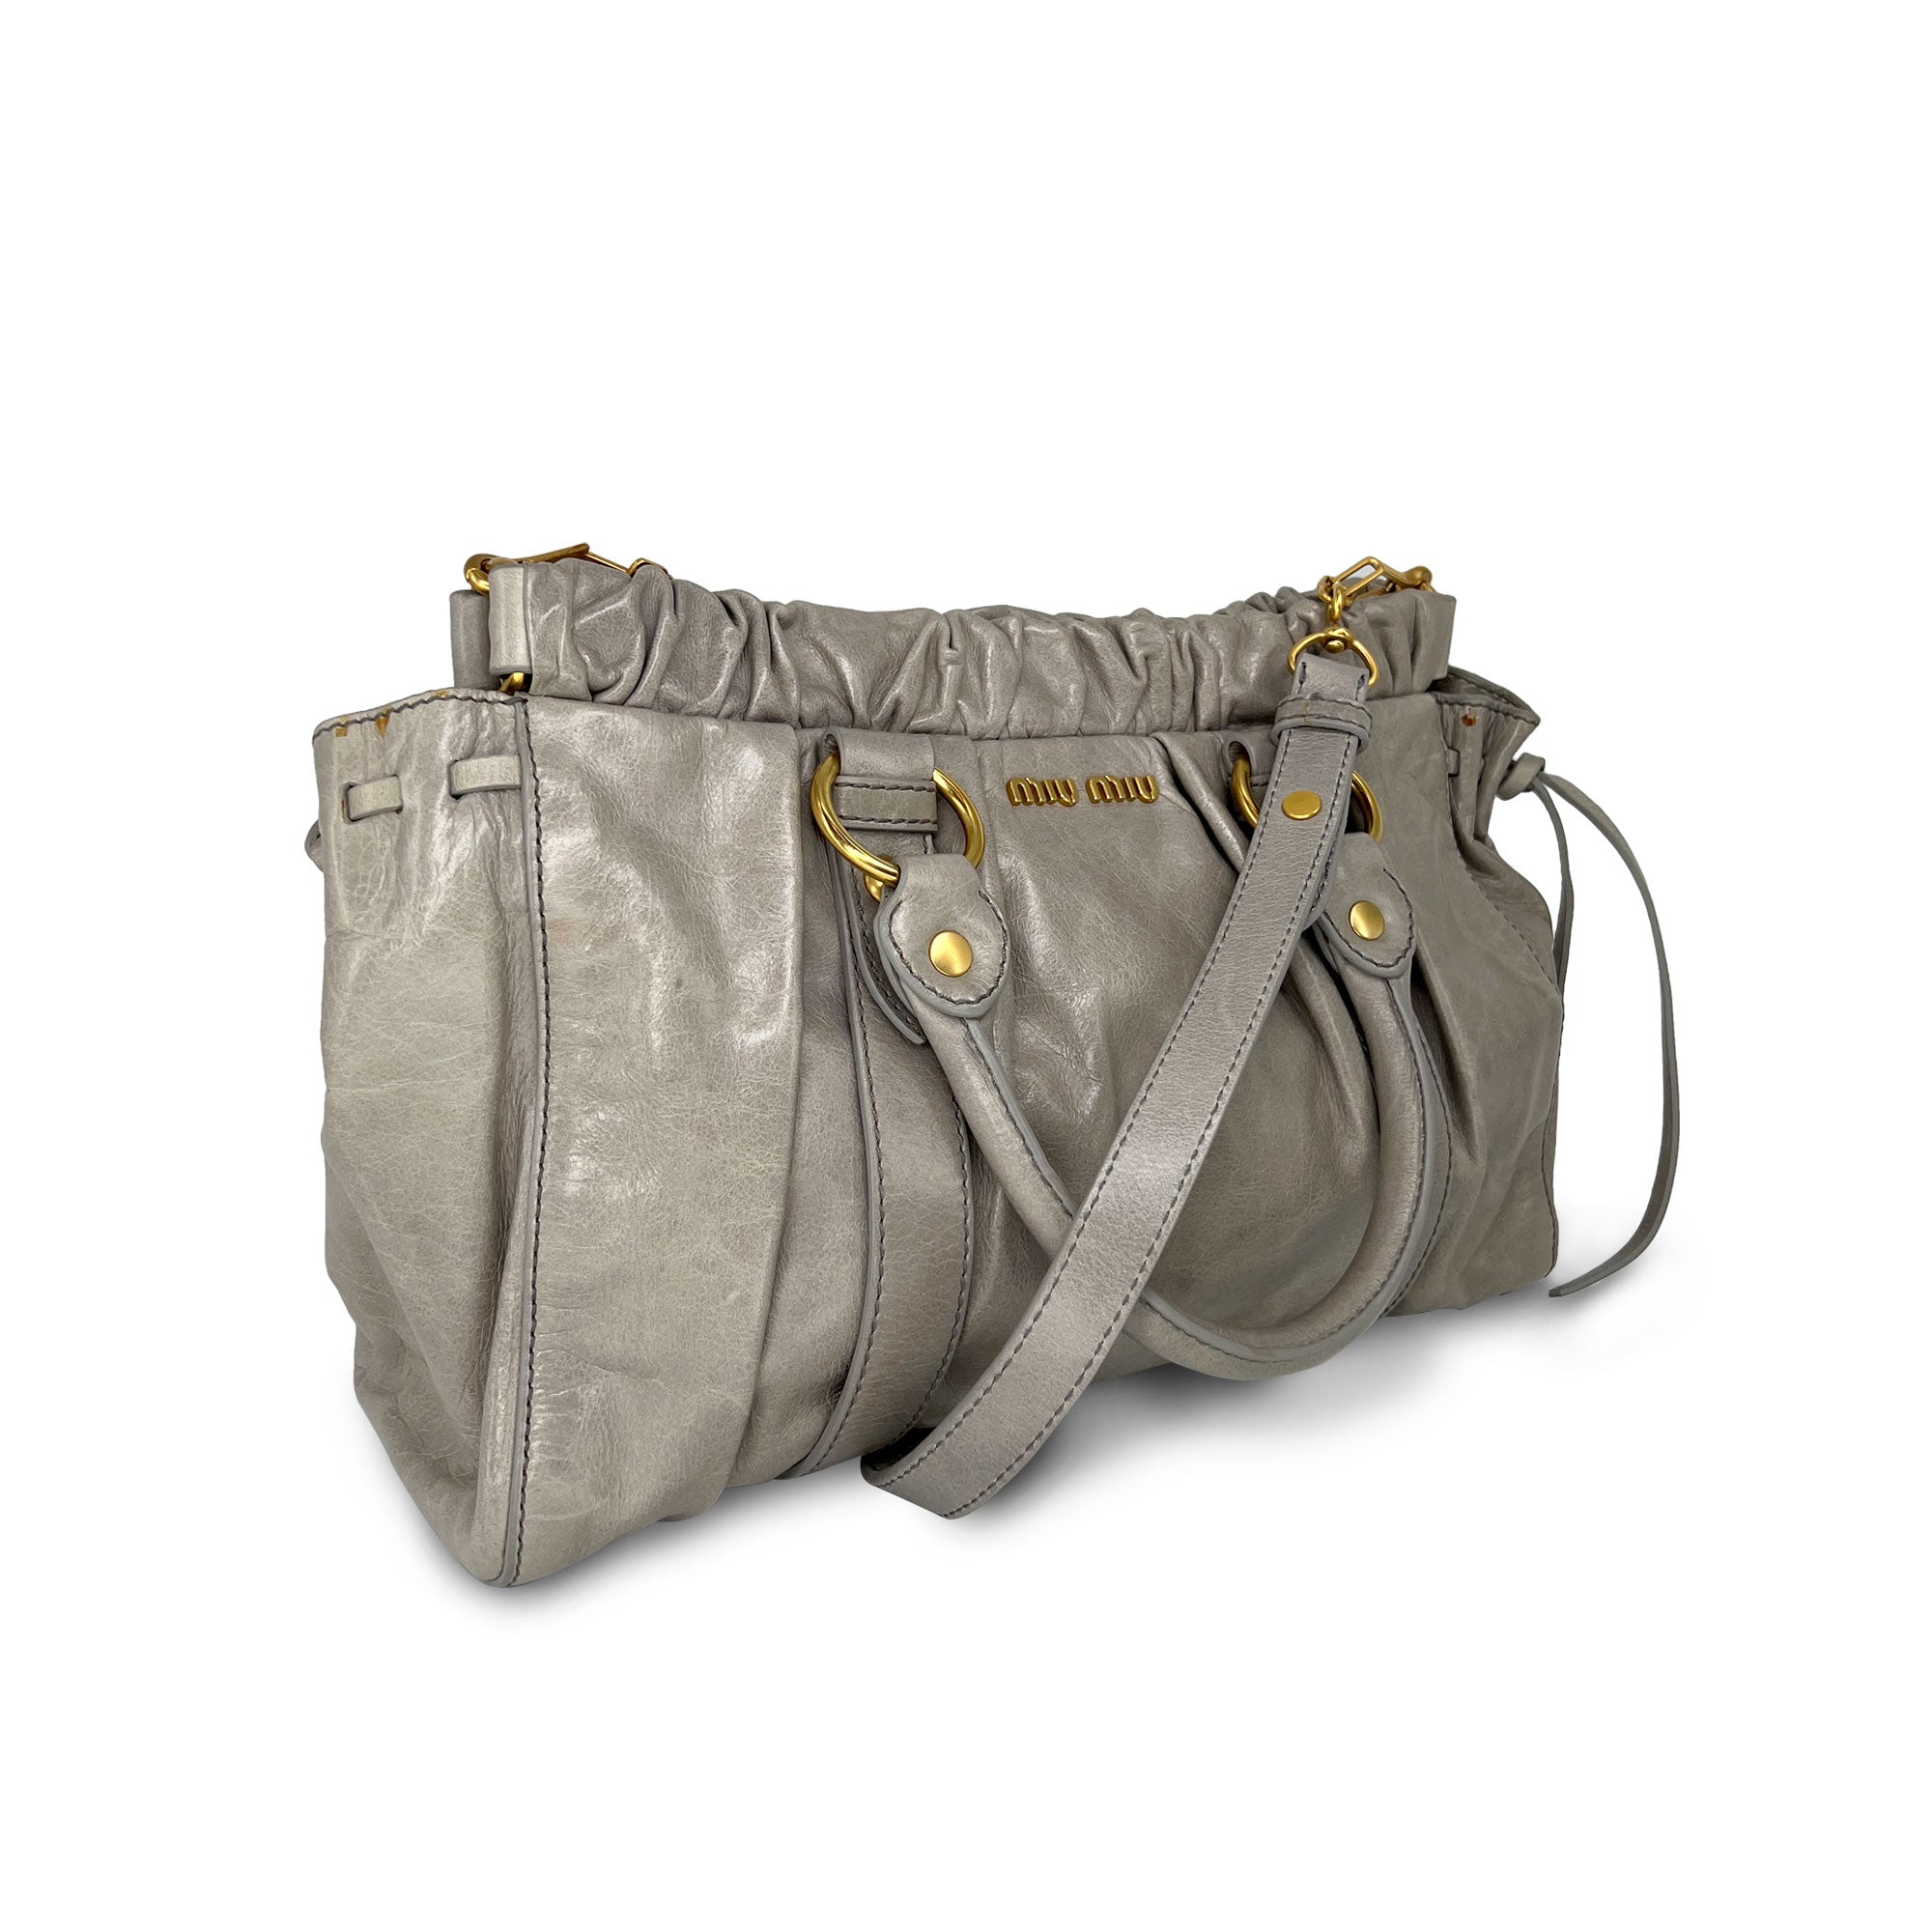 Miu Miu leather grey handbag